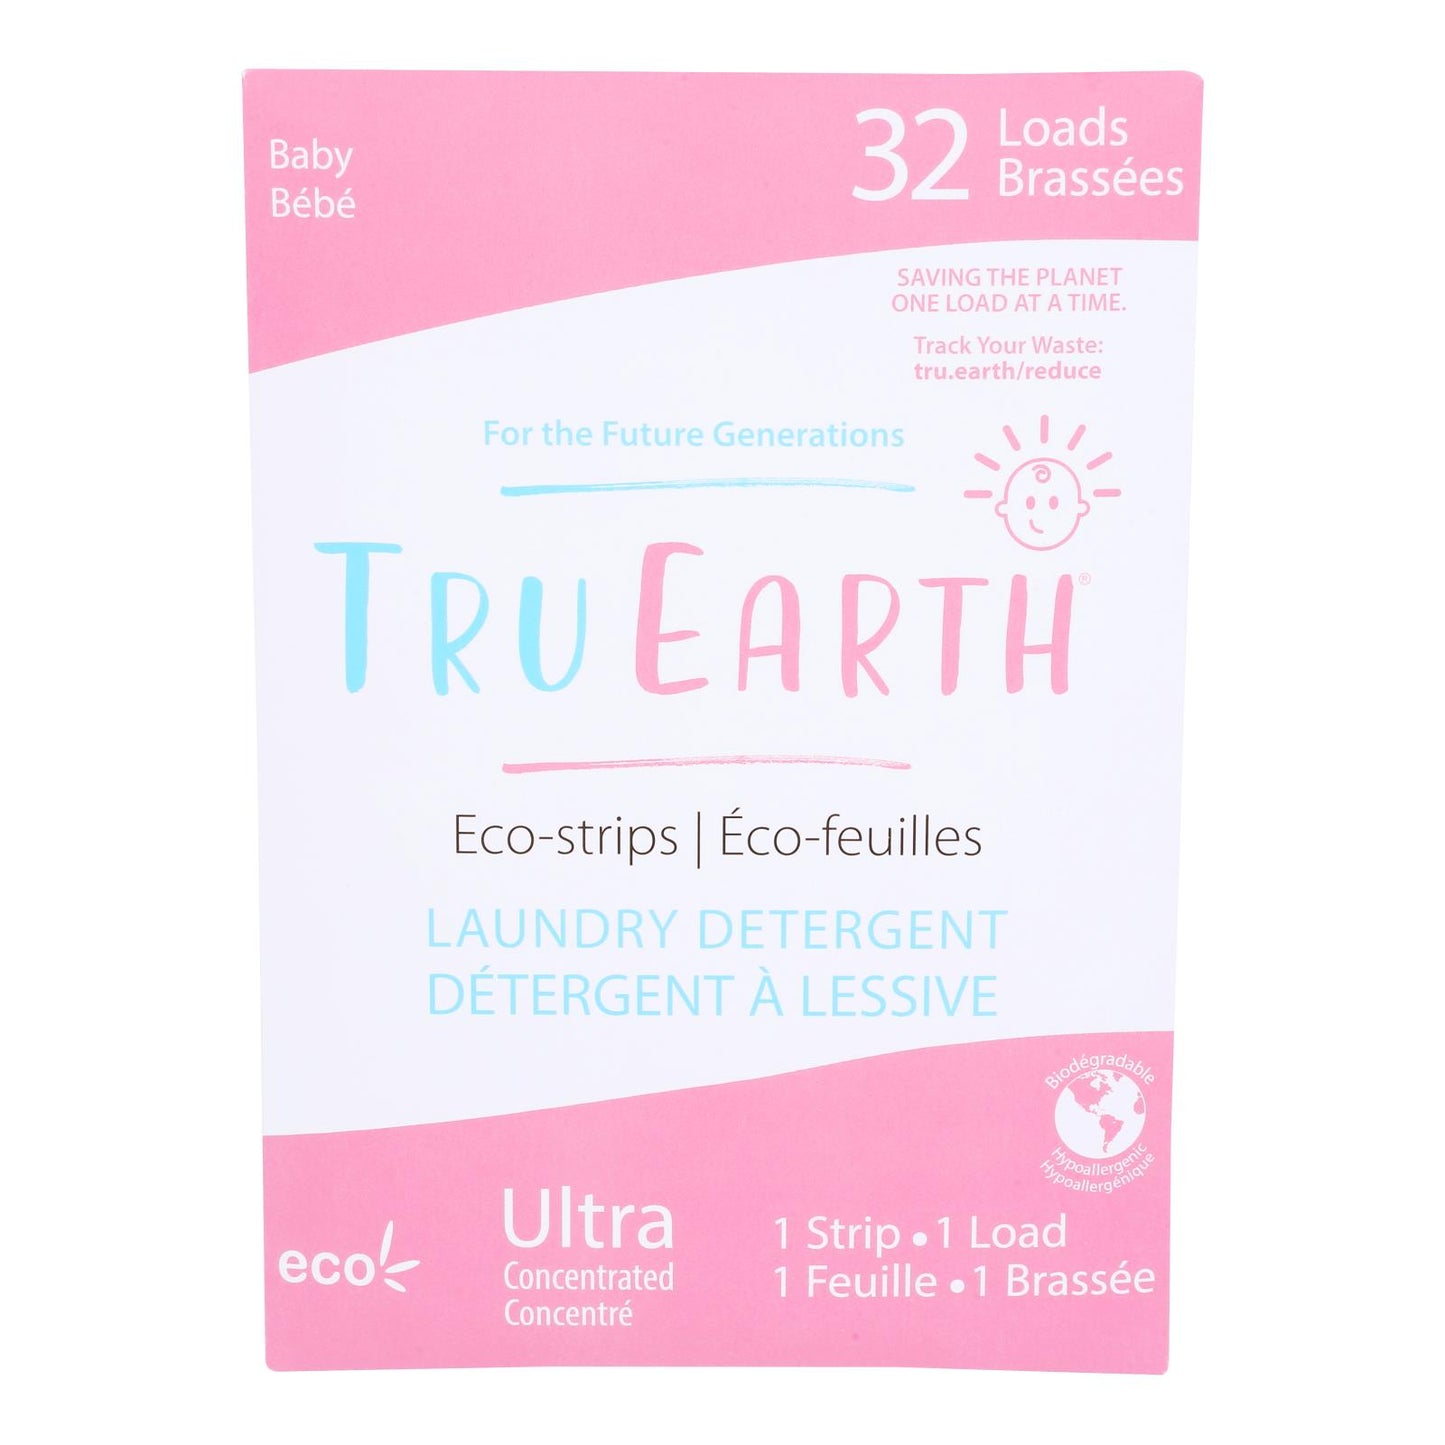 Tru Earth - Detergent Baby Eco Strip - Case Of 12-32 Ct